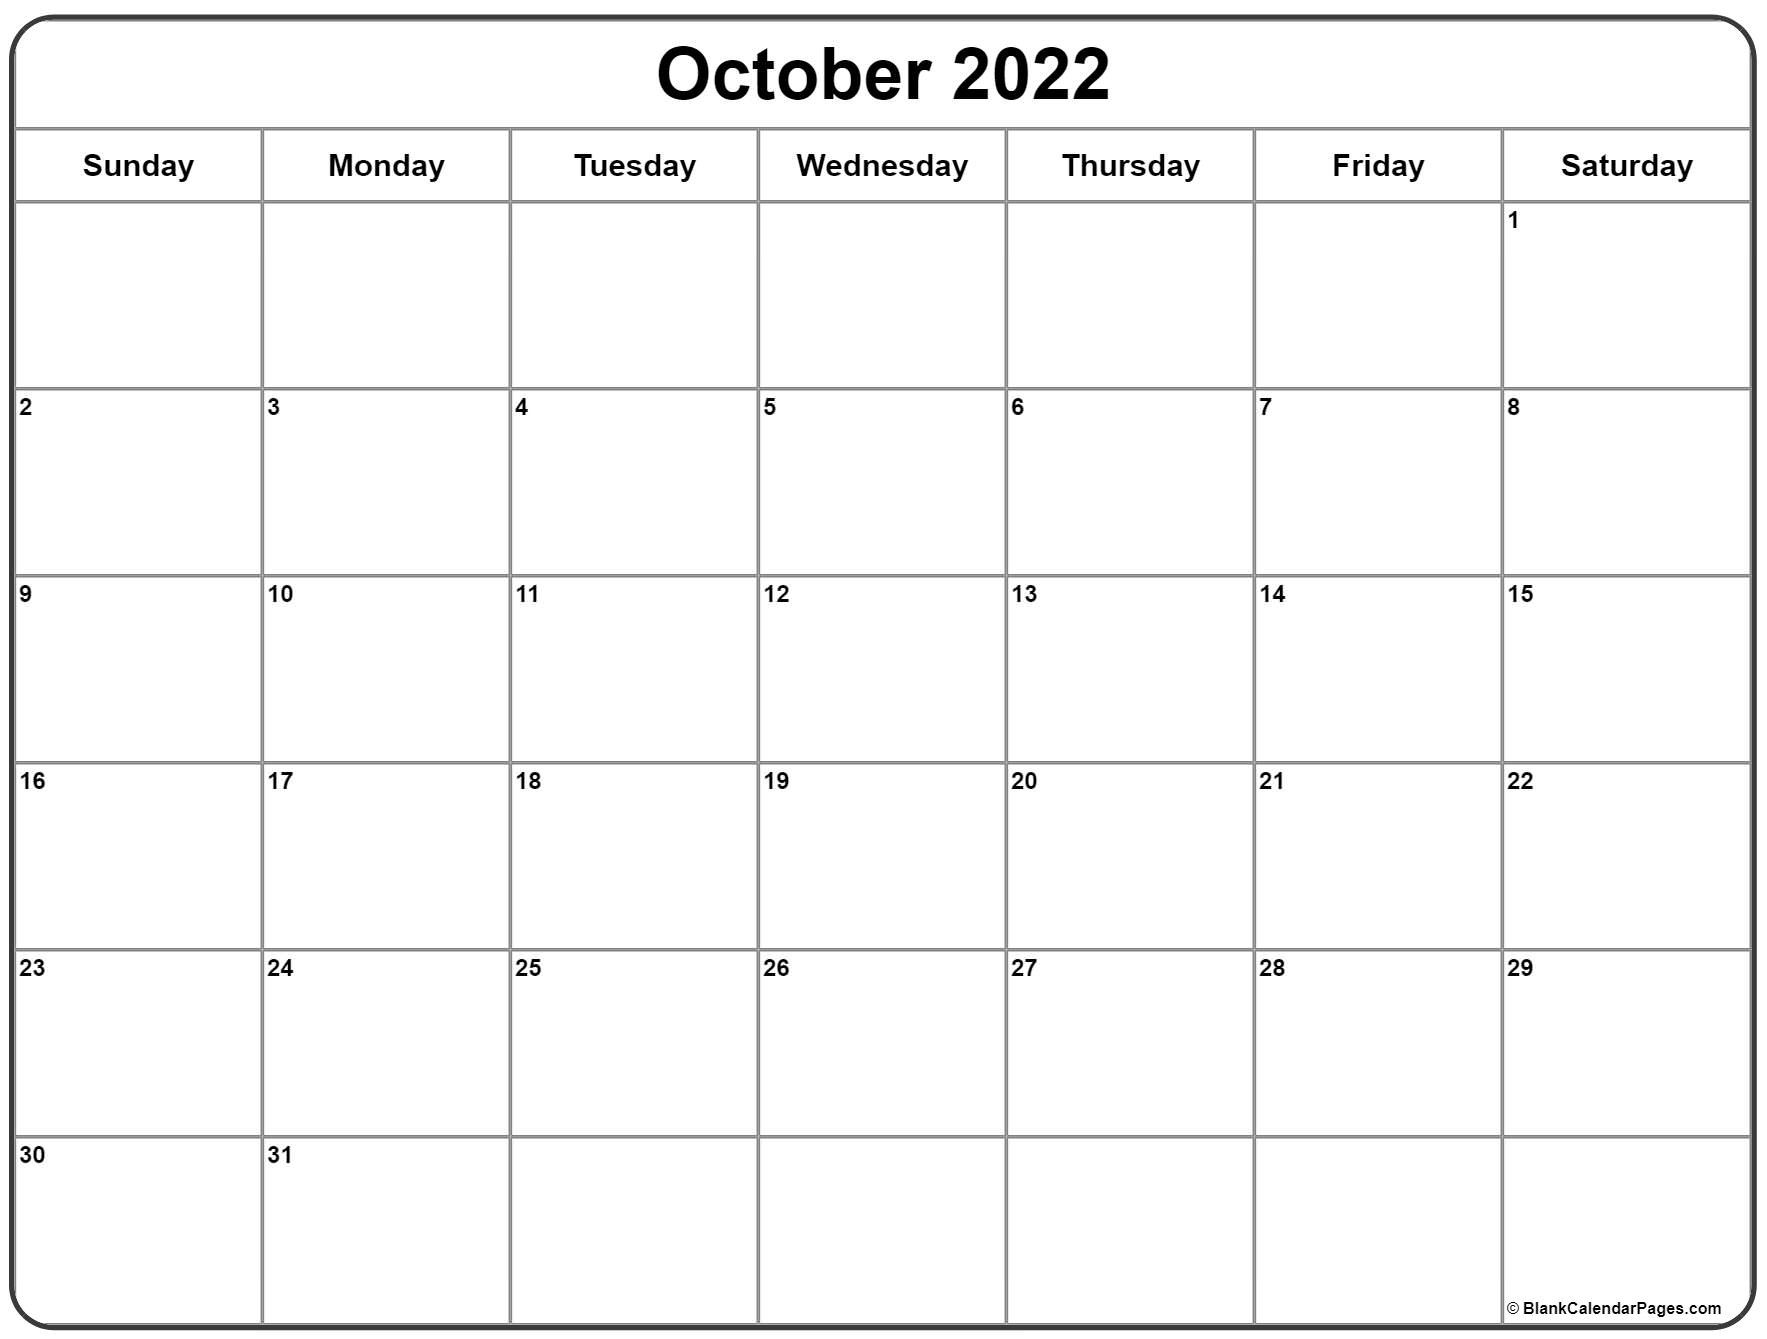 October 2022 Calendar | Free Printable Calendar Templates  October 2022 To Jan 2022 Calendar